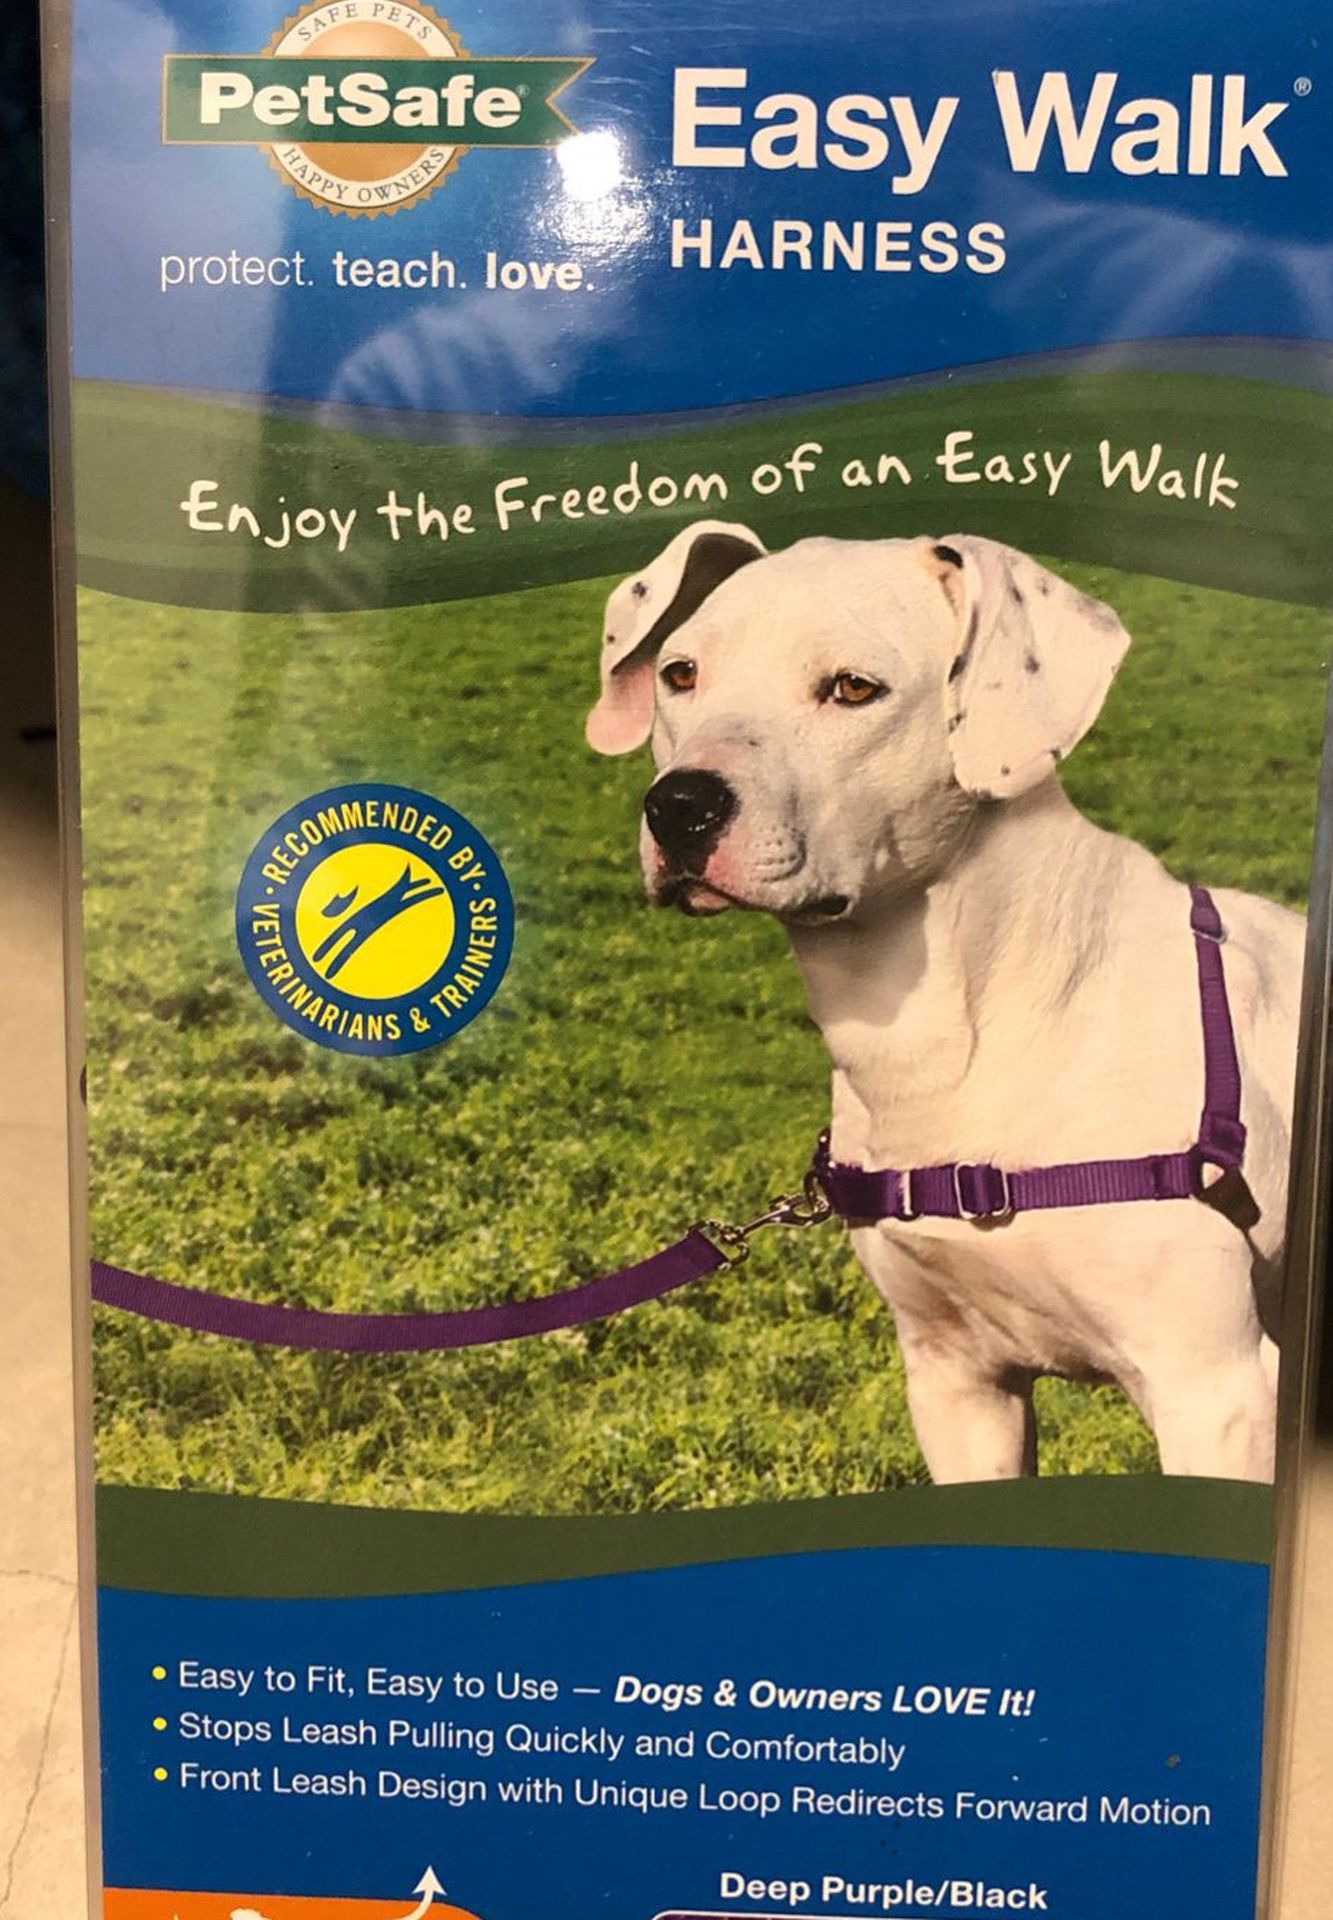 Easy Walk dog harness